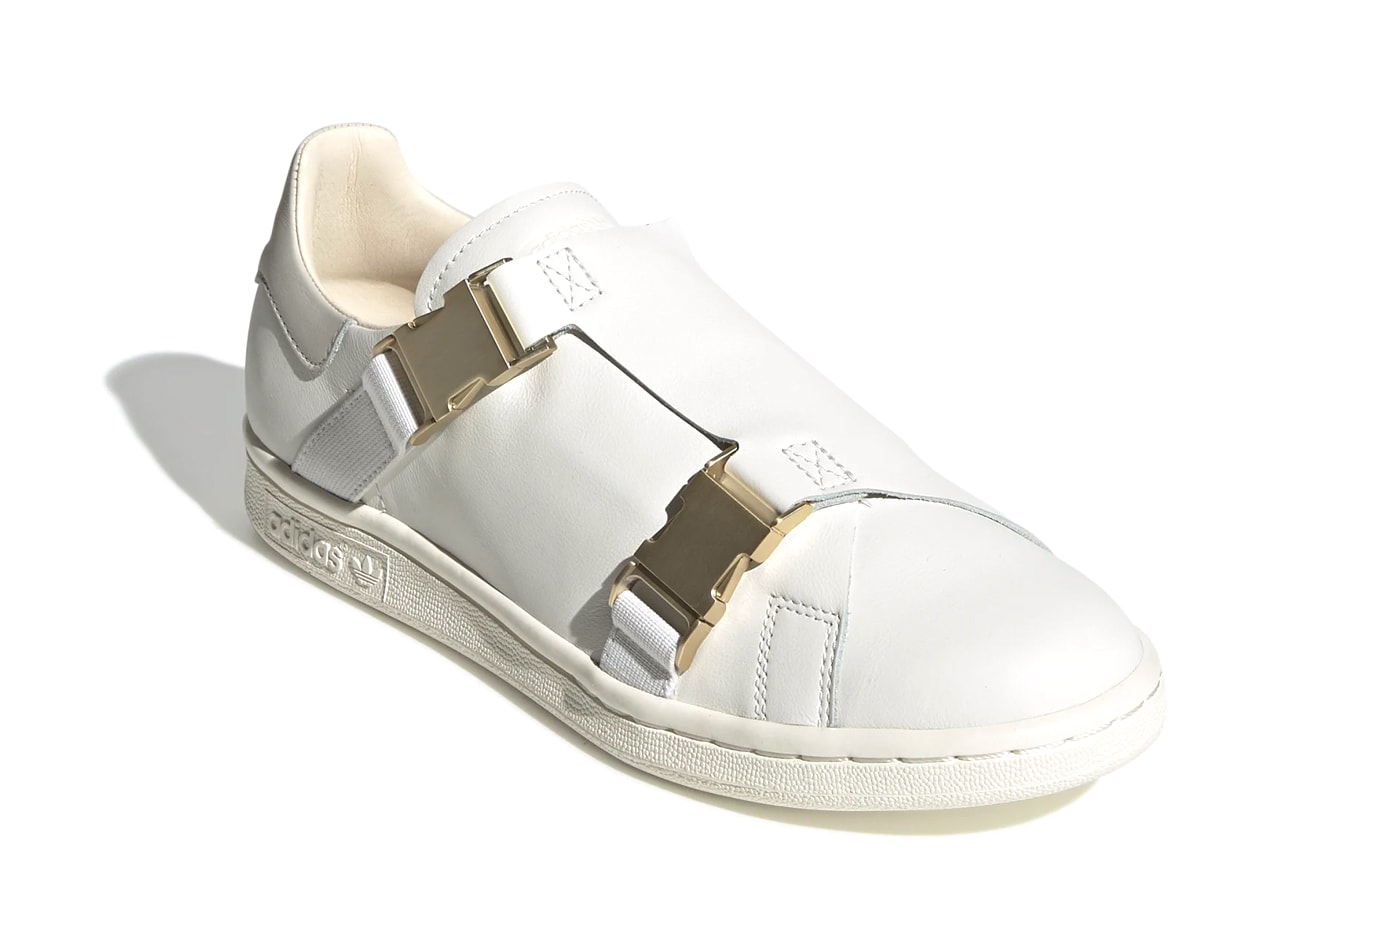 adidas Originals Stan Smith Buckle Sneaker Drop EE4889 colorway september 1 2019 drop buy colorway RUNNING raw off white